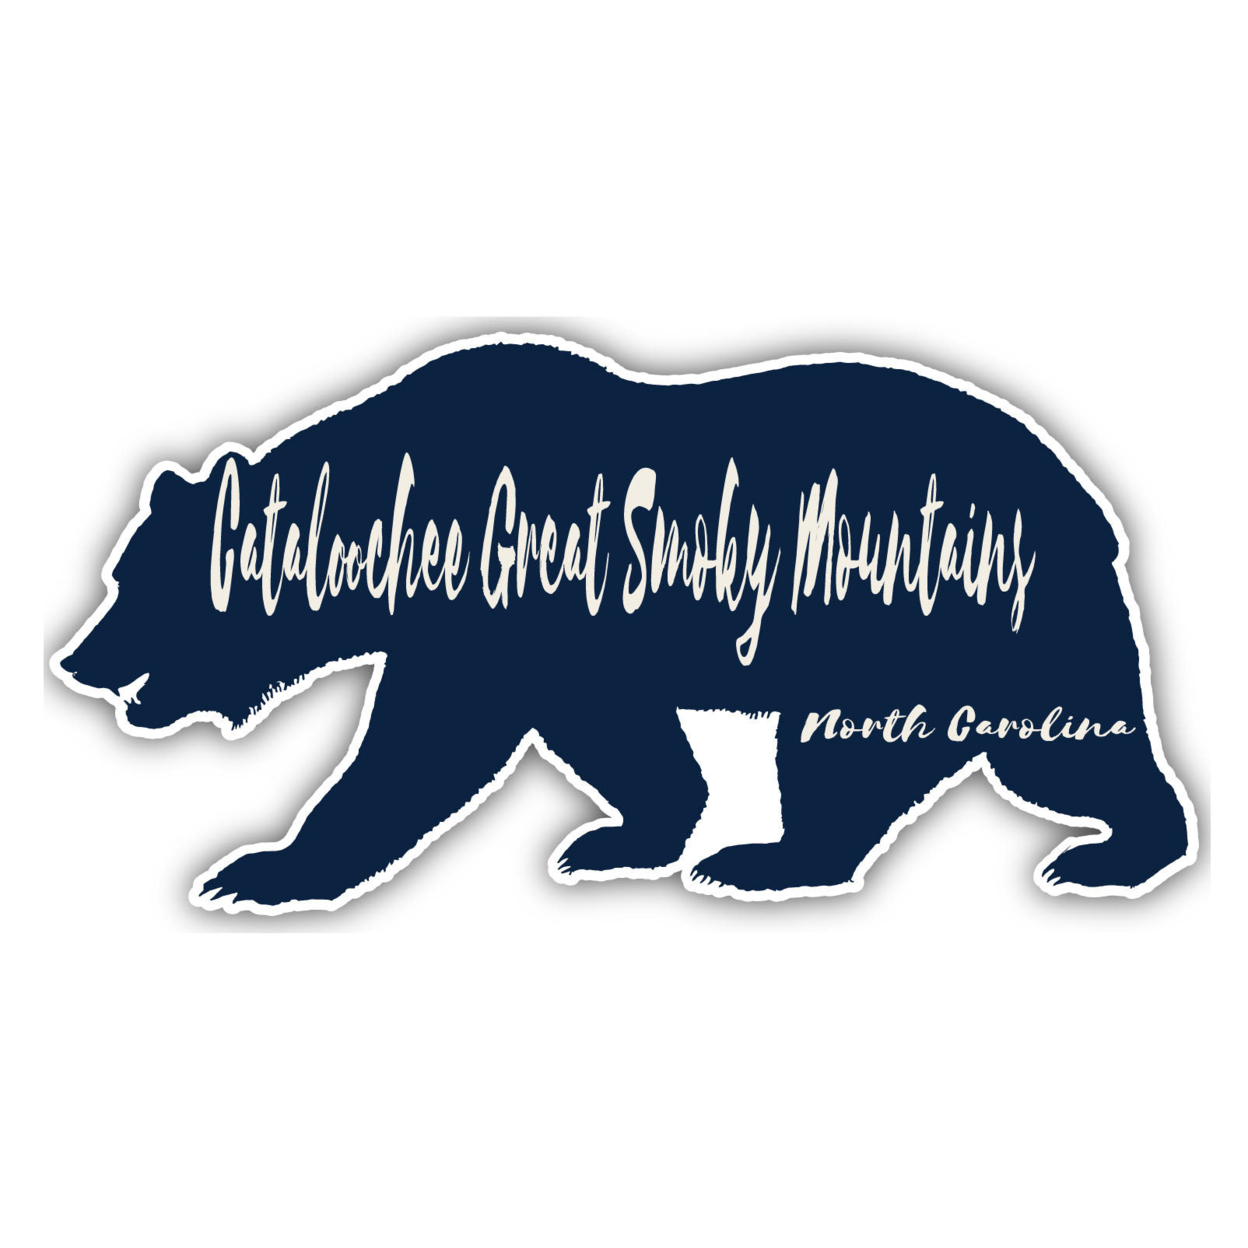 Cataloochee Great Smoky Mountains North Carolina Souvenir Decorative Stickers (Choose Theme And Size) - Single Unit, 4-Inch, Bear